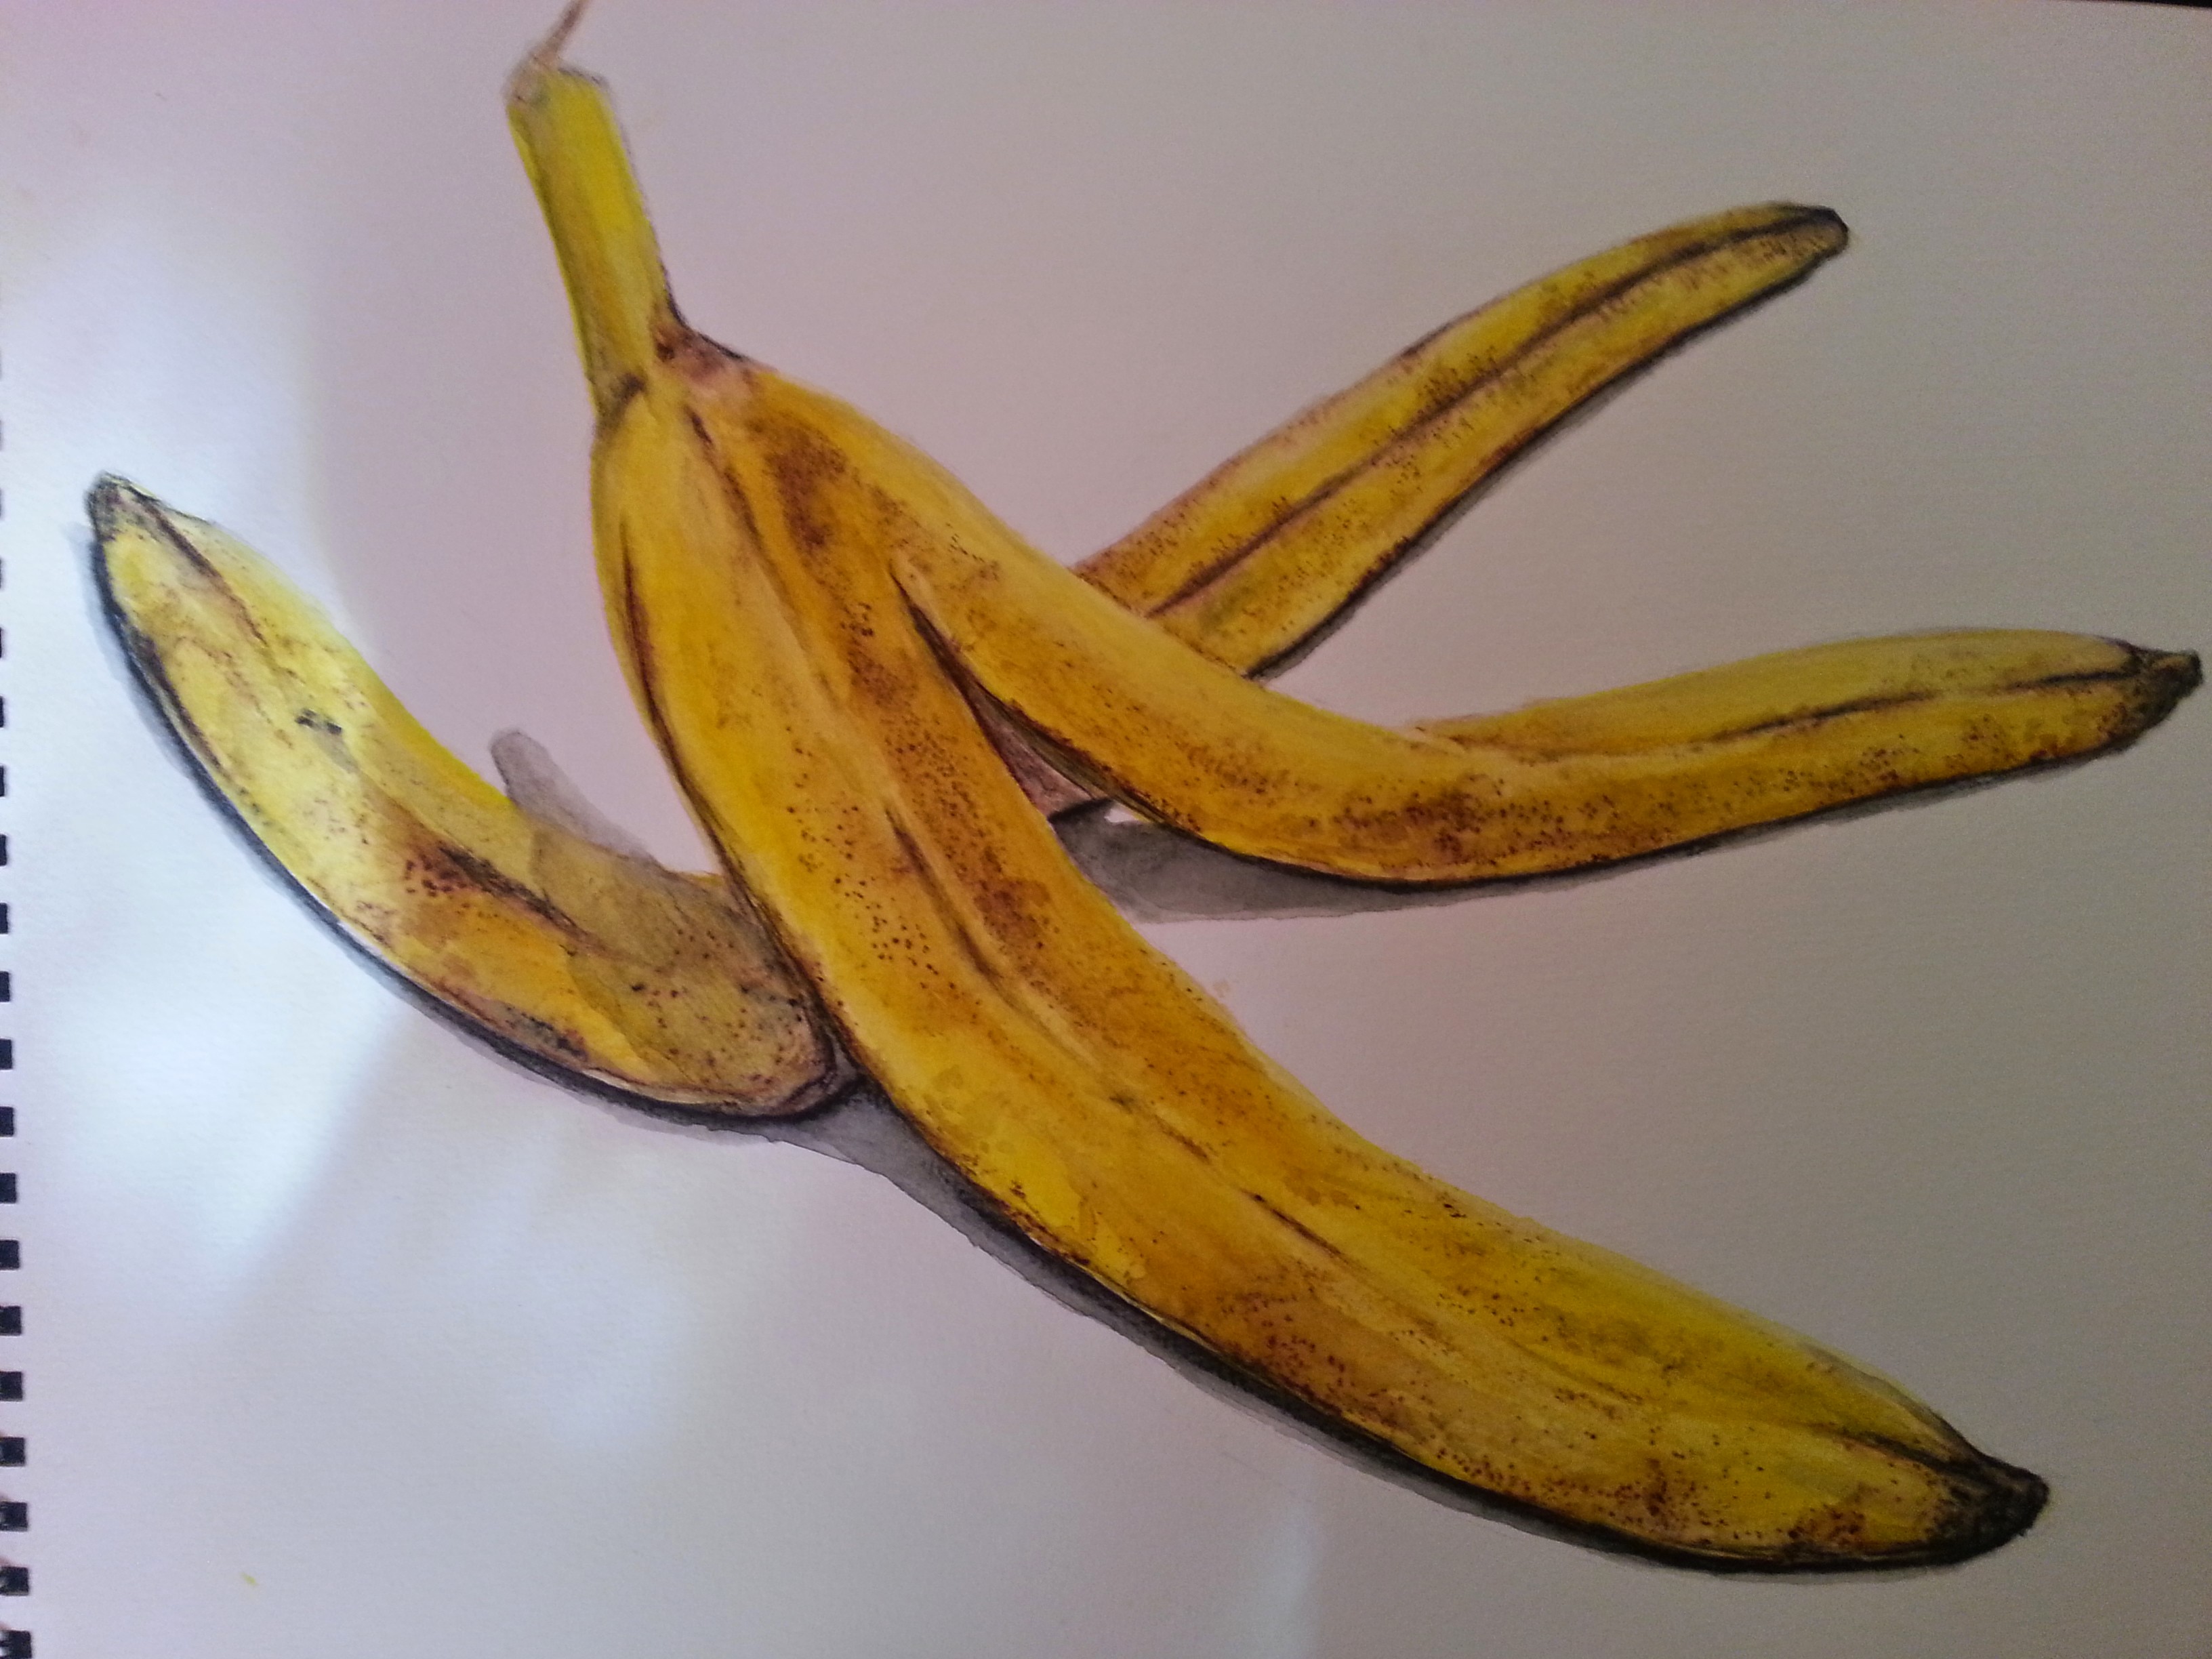 I painted a banana peel. - Album on Imgur